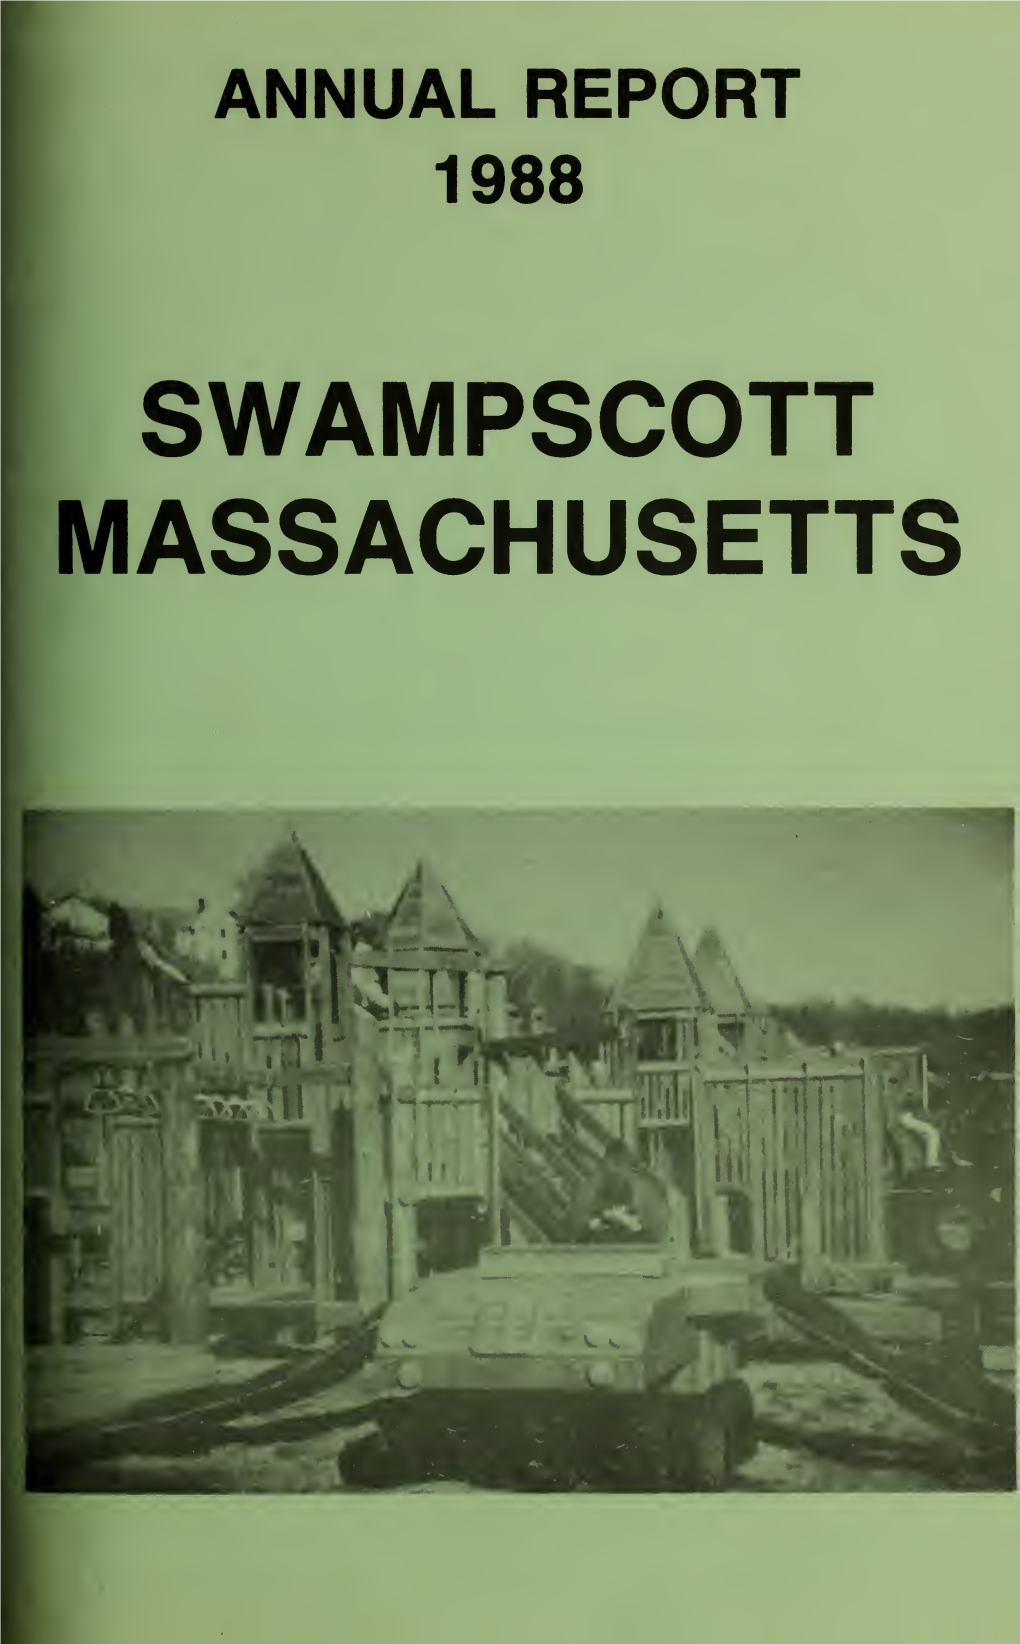 Swampscott-1988.Pdf (8.234Mb)